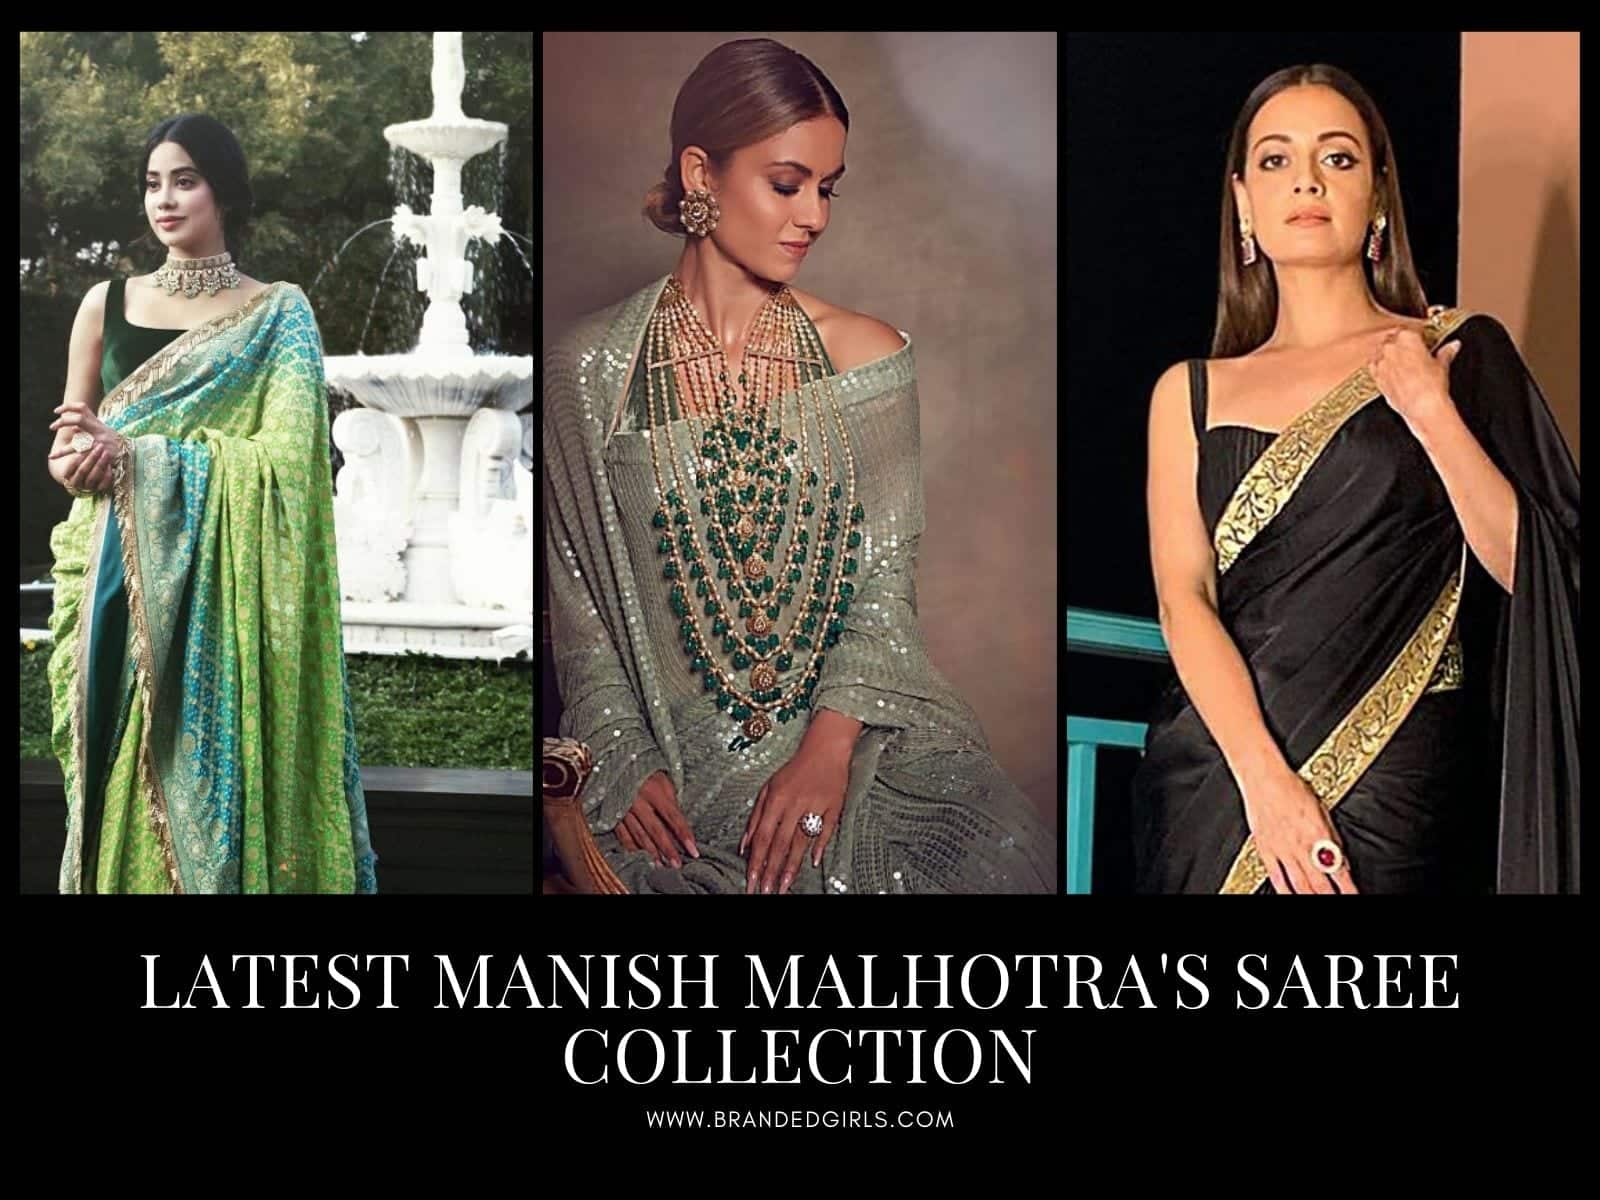 Manish Malhotra's Saree Collection